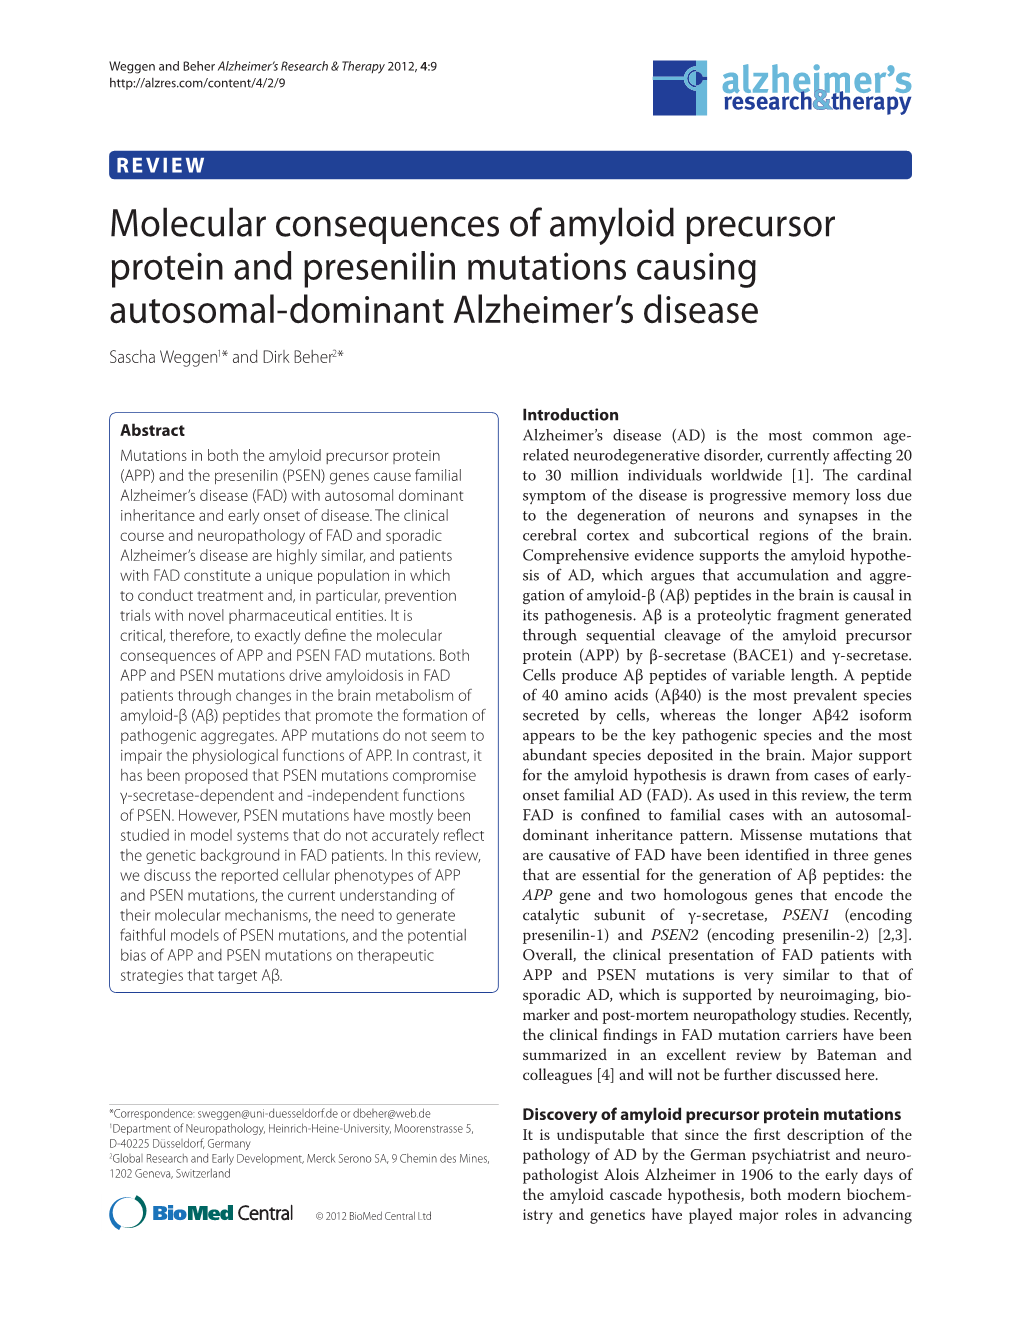 Molecular Consequences of Amyloid Precursor Protein and Presenilin Mutations Causing Autosomal-Dominant Alzheimer’S Disease